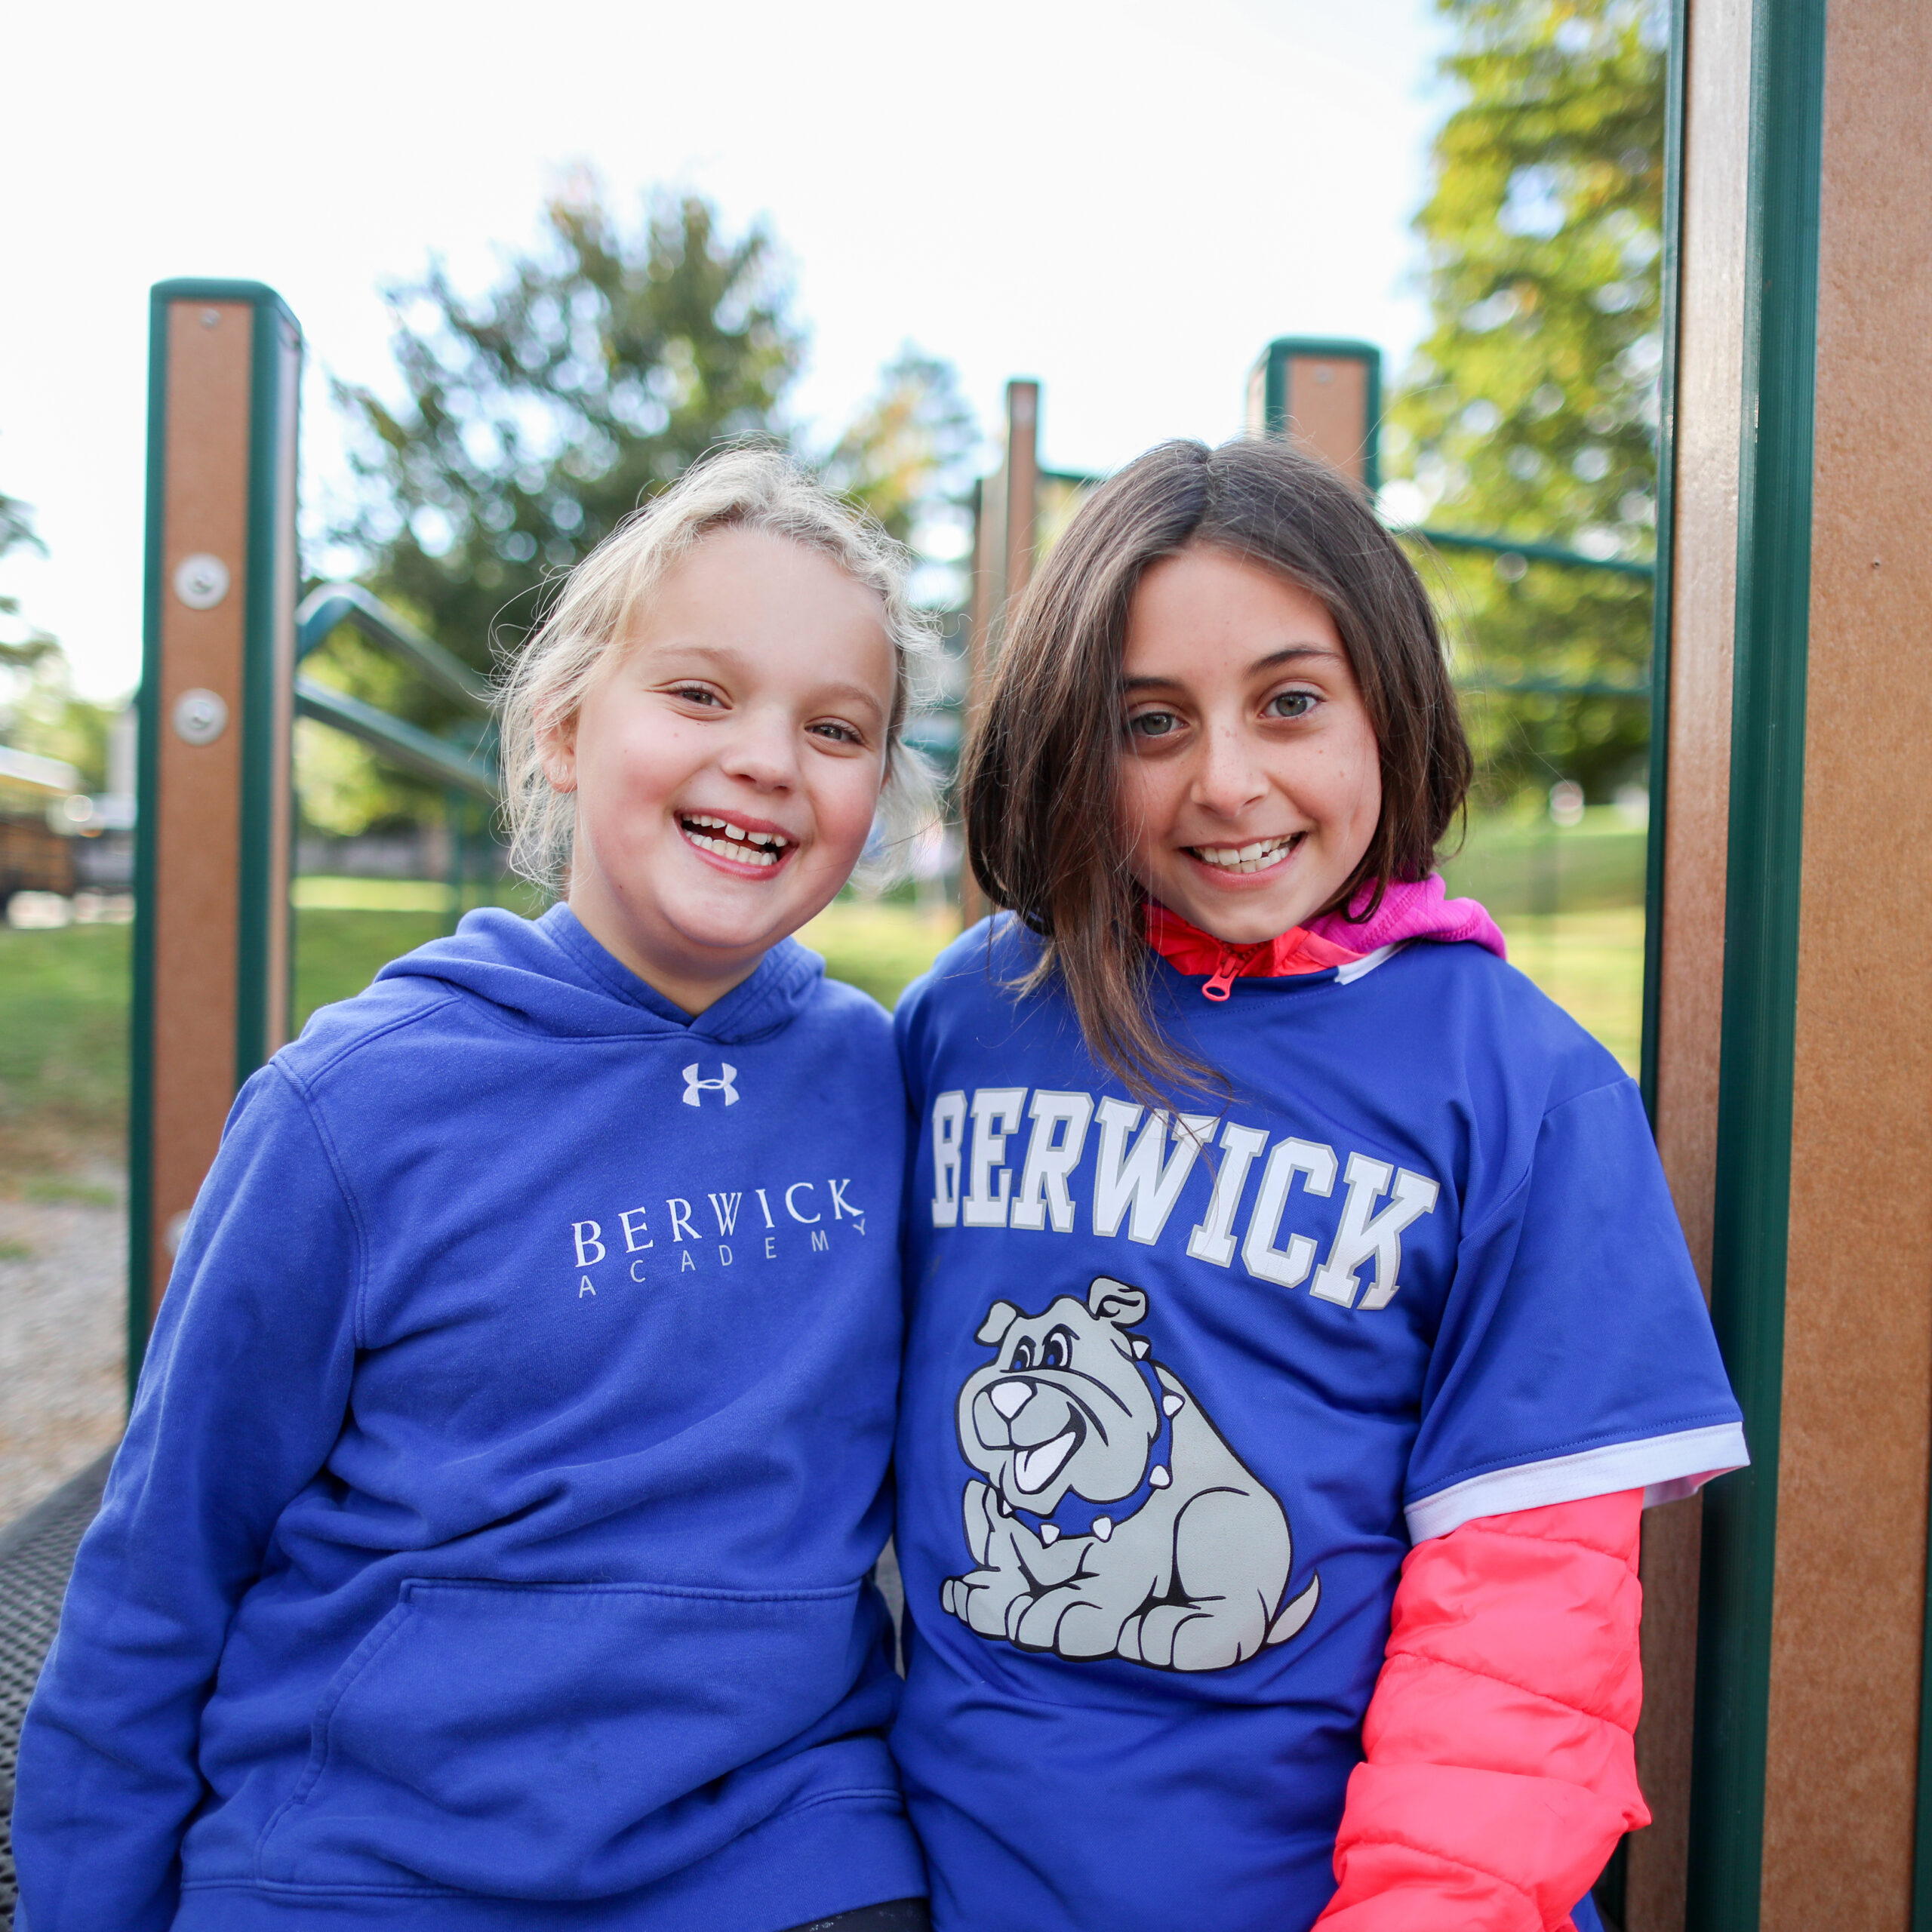 Berwick Academy, Pre-K to Grade 12 Private School